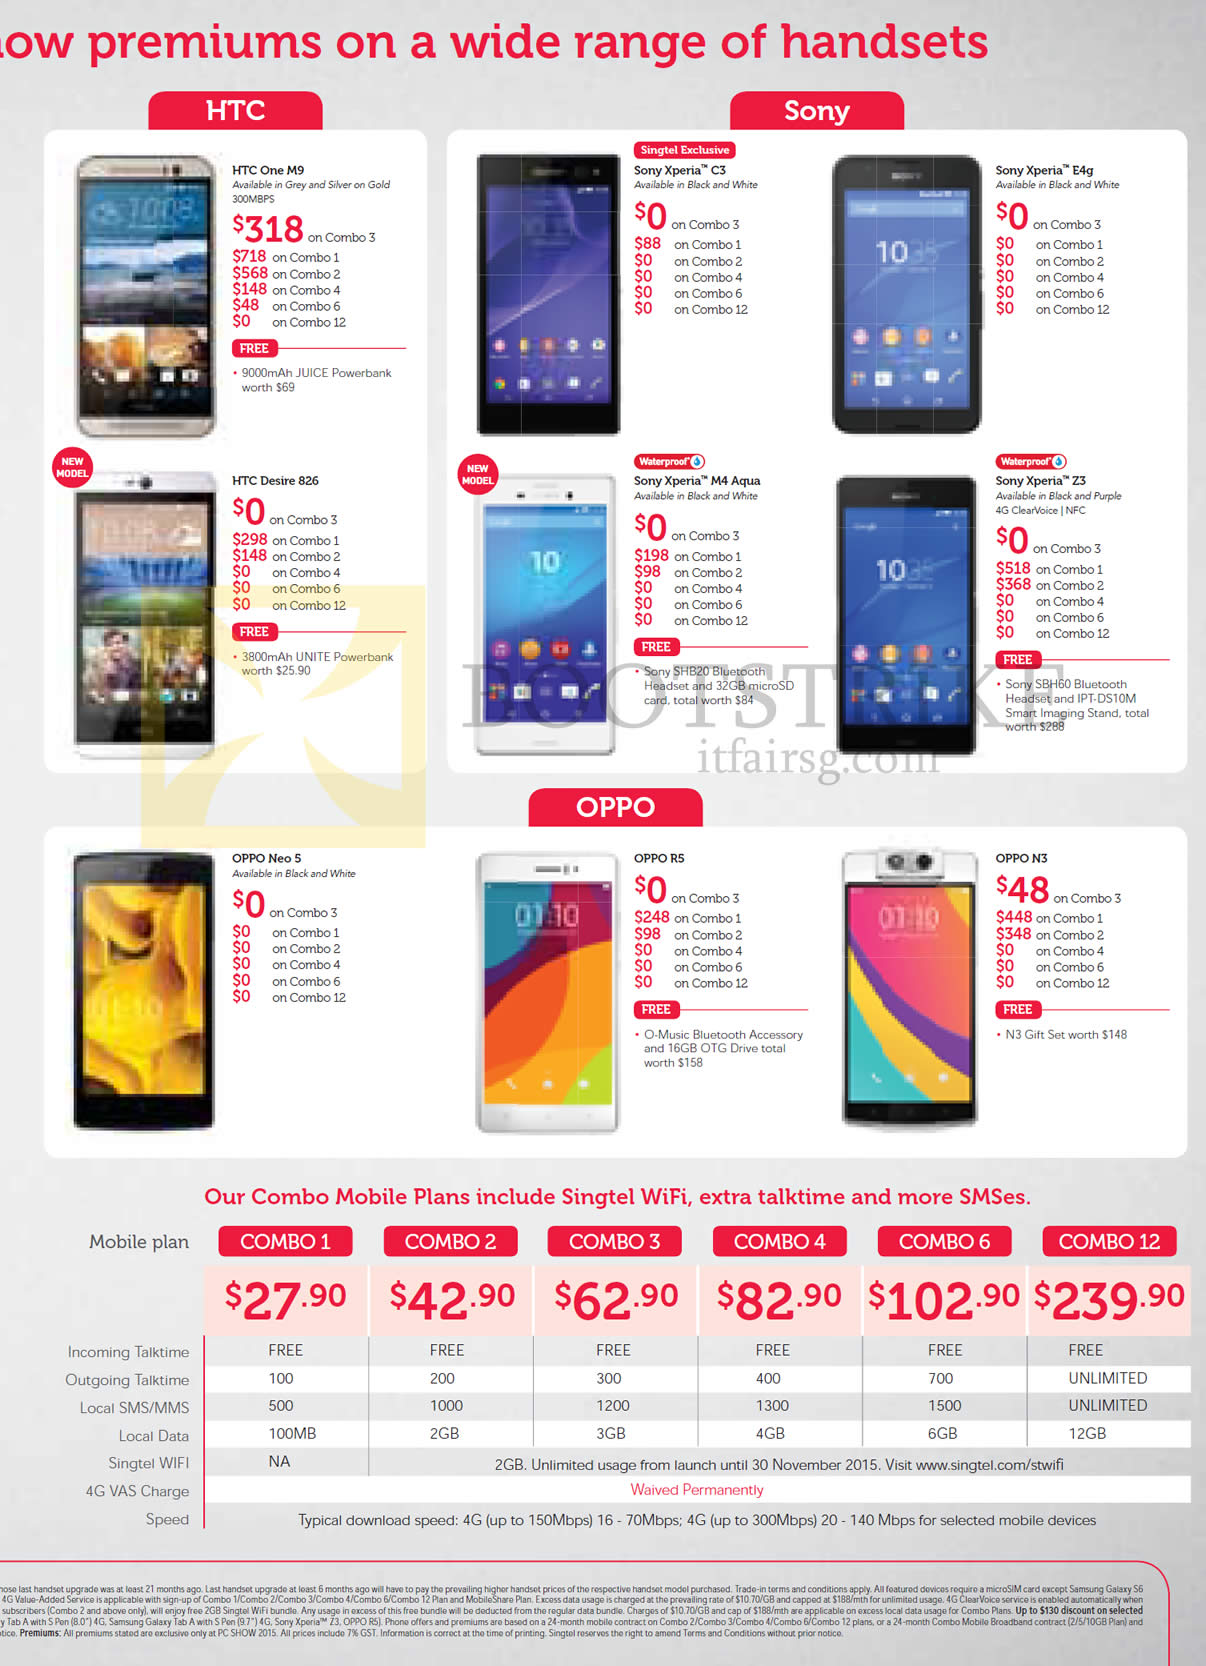 PC SHOW 2015 price list image brochure of Singtel HTC One M9, Desire 826, Sony Xperia C3, E4g, M4 Aqua, Z3, OPPO Neo 5, R5, N3, Combo Mobile Plans